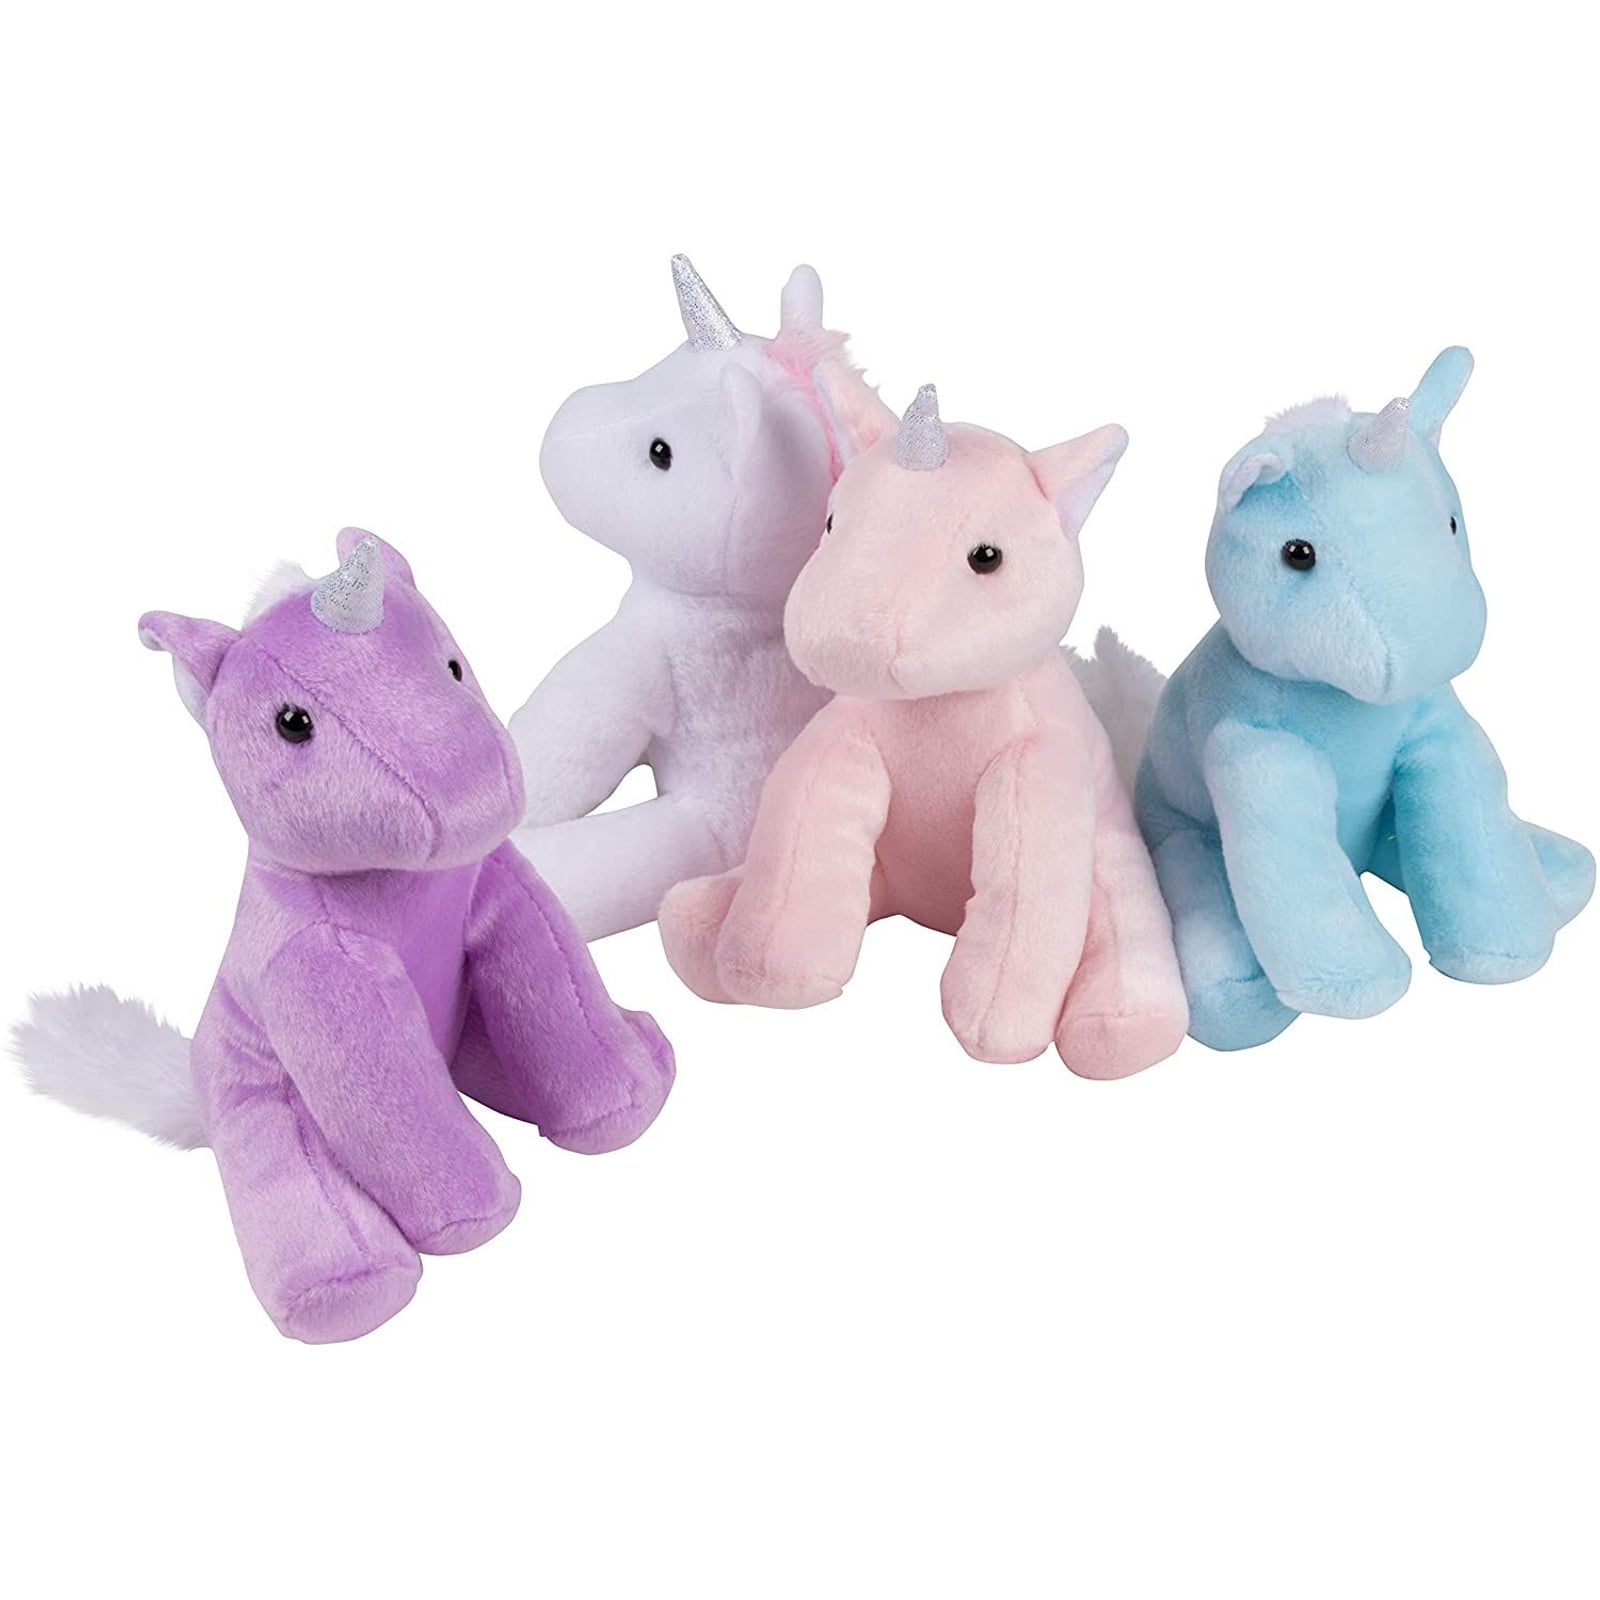 Plush Unicorn Castle with Animals - Five (5) Stuffed Animal 